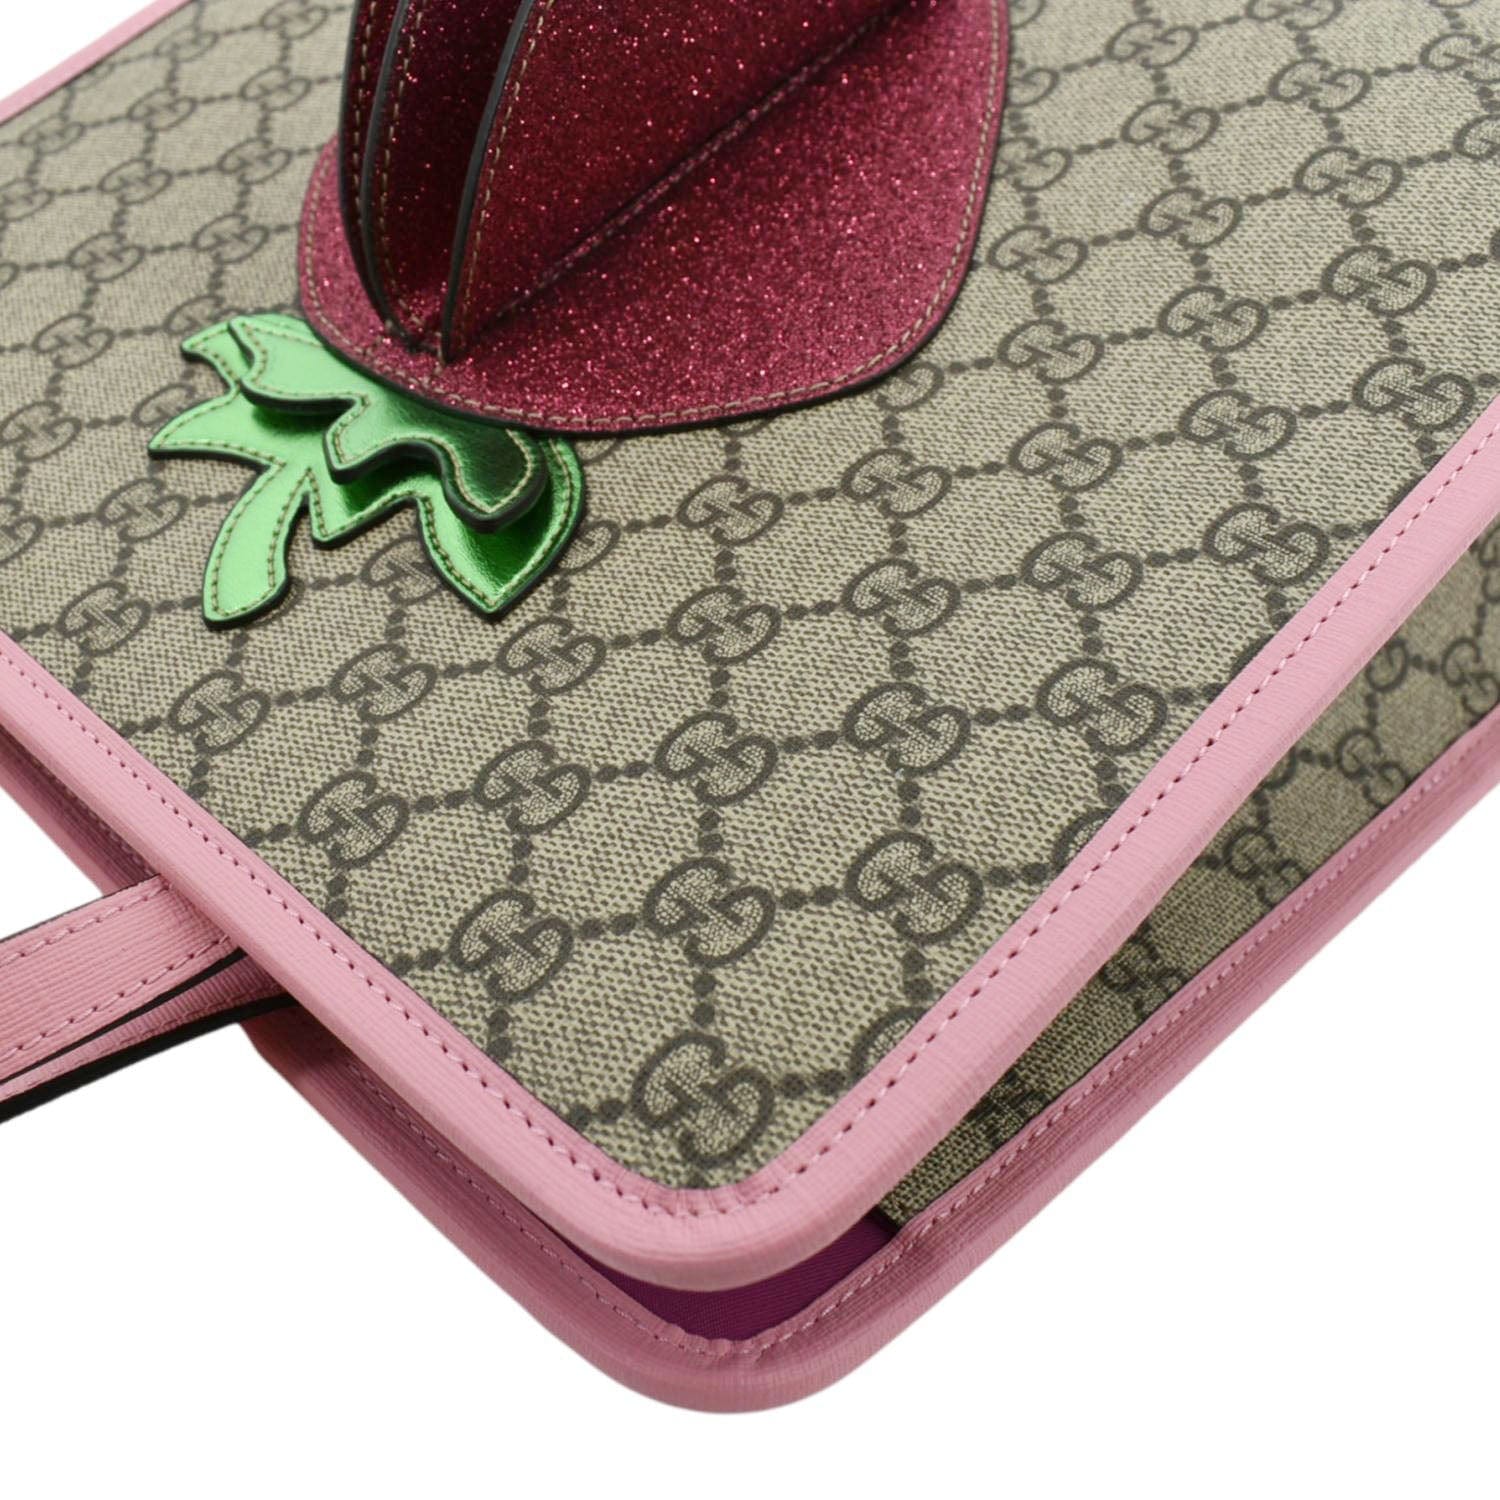 Gucci Ladies Marmont Small Top Handle Bag : Amazon.in: शूज़ और हैंडबैग्स